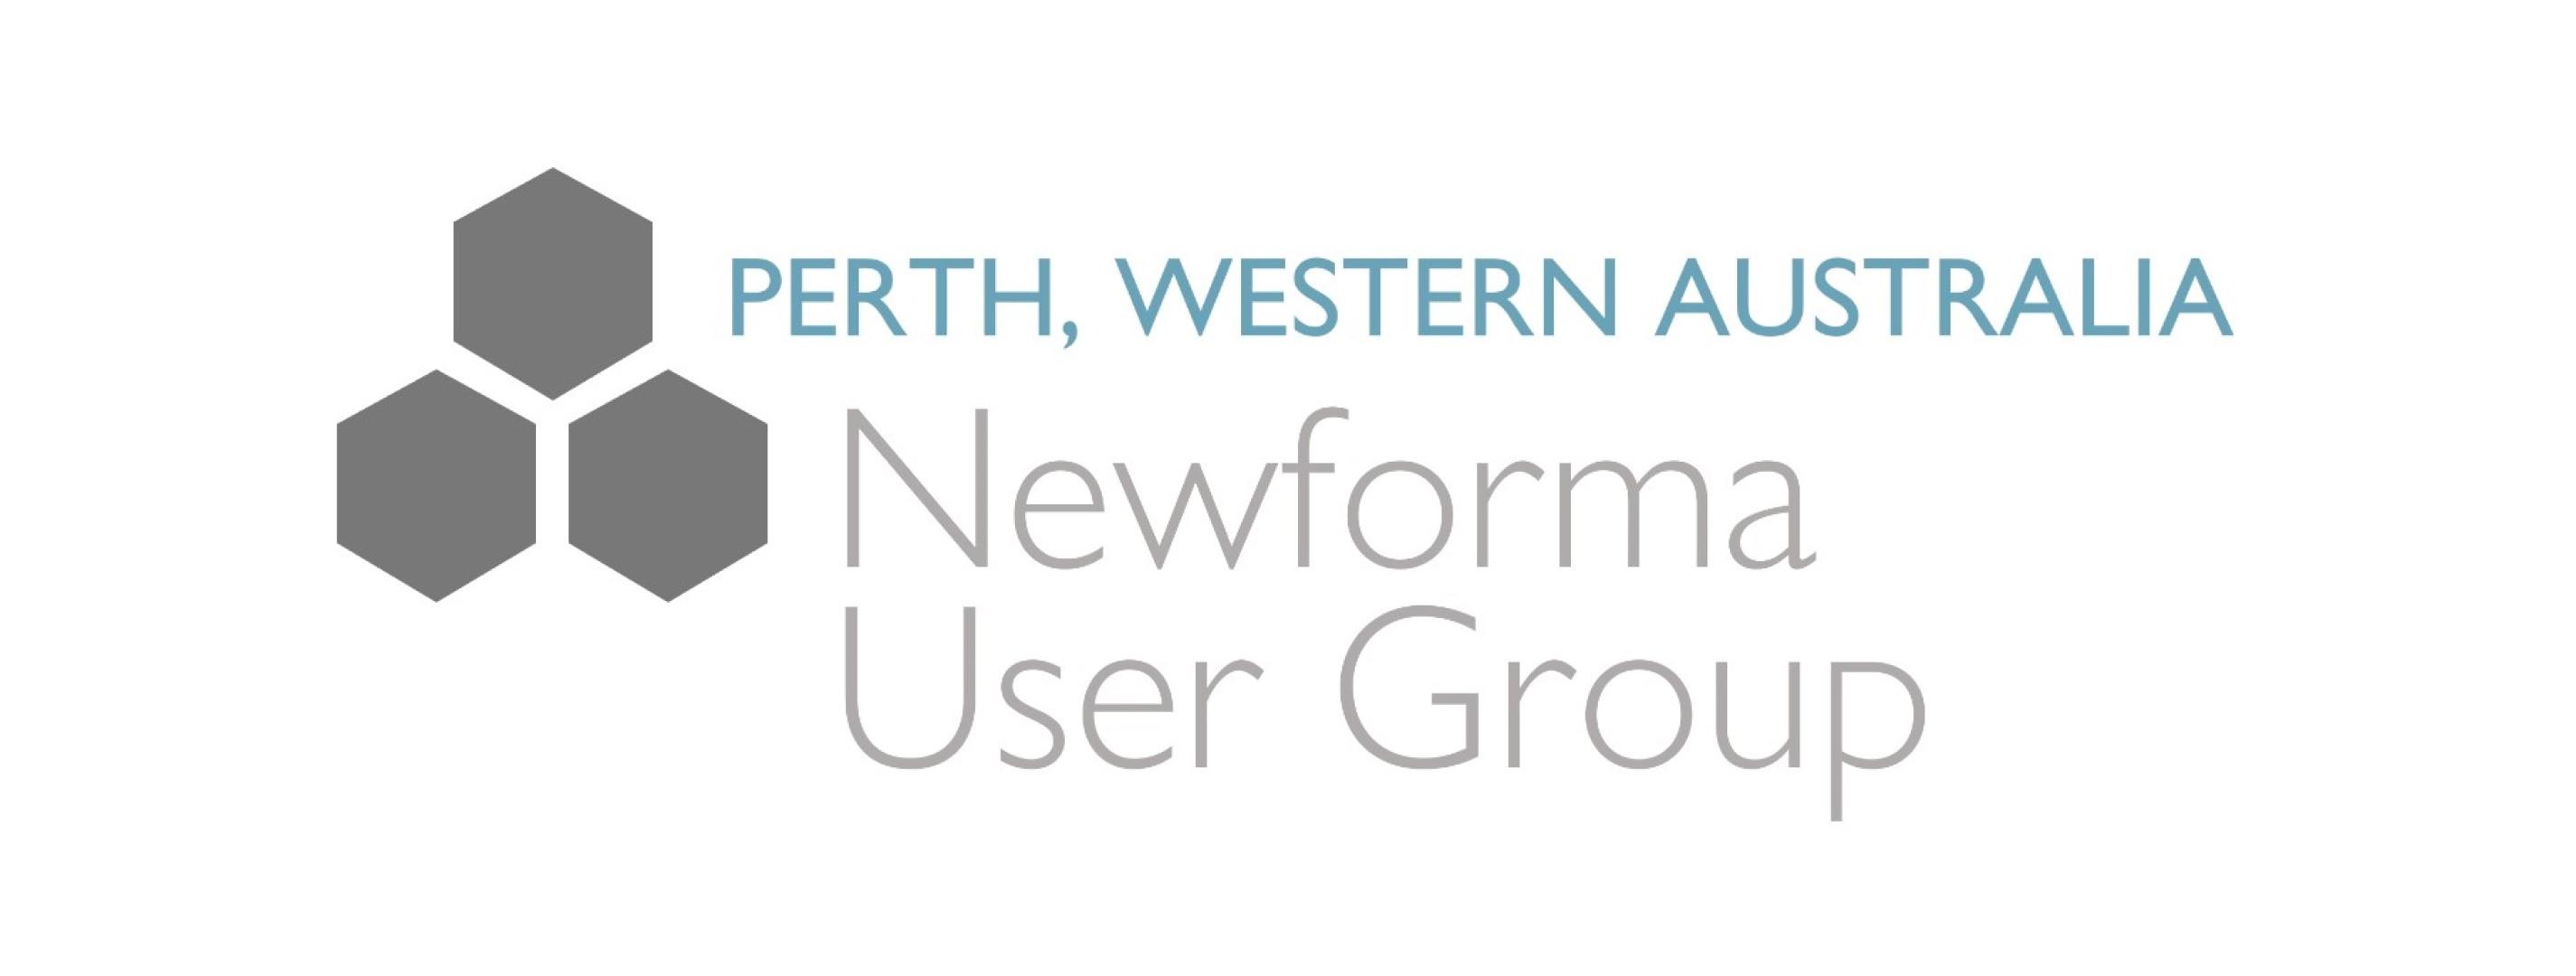 Newforma User Group - Perth, Western Australia